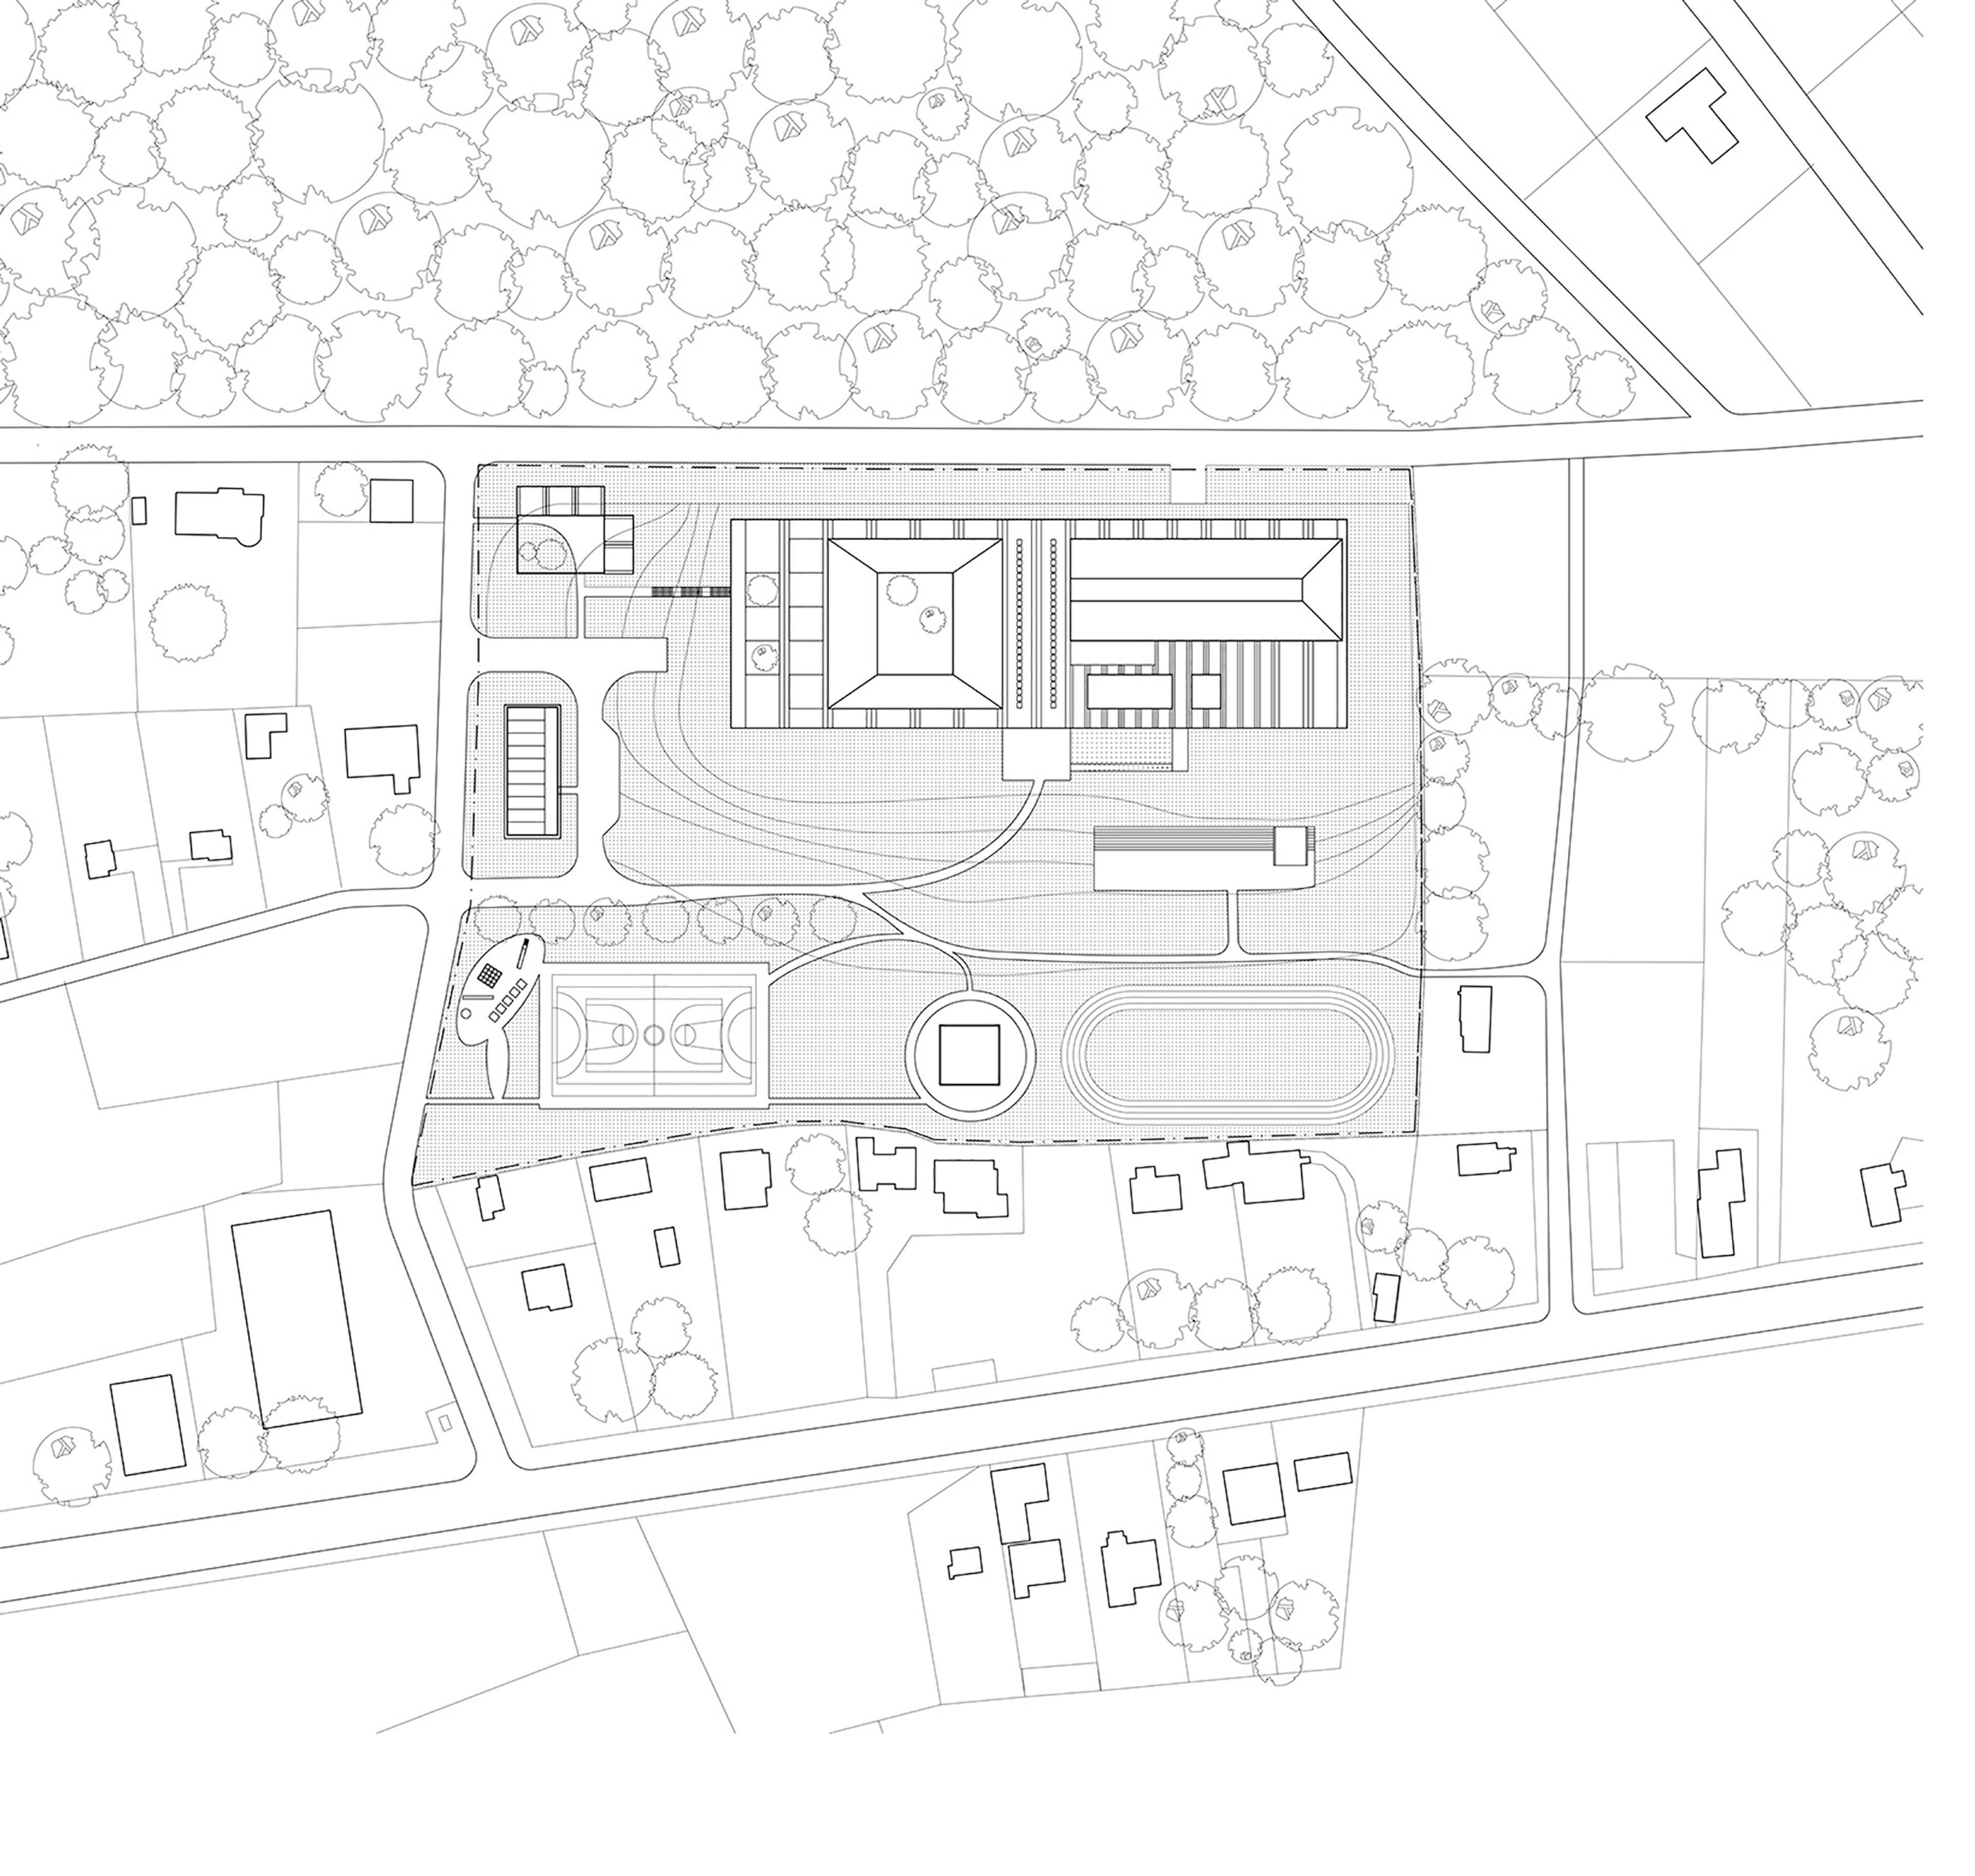 site plan of a school